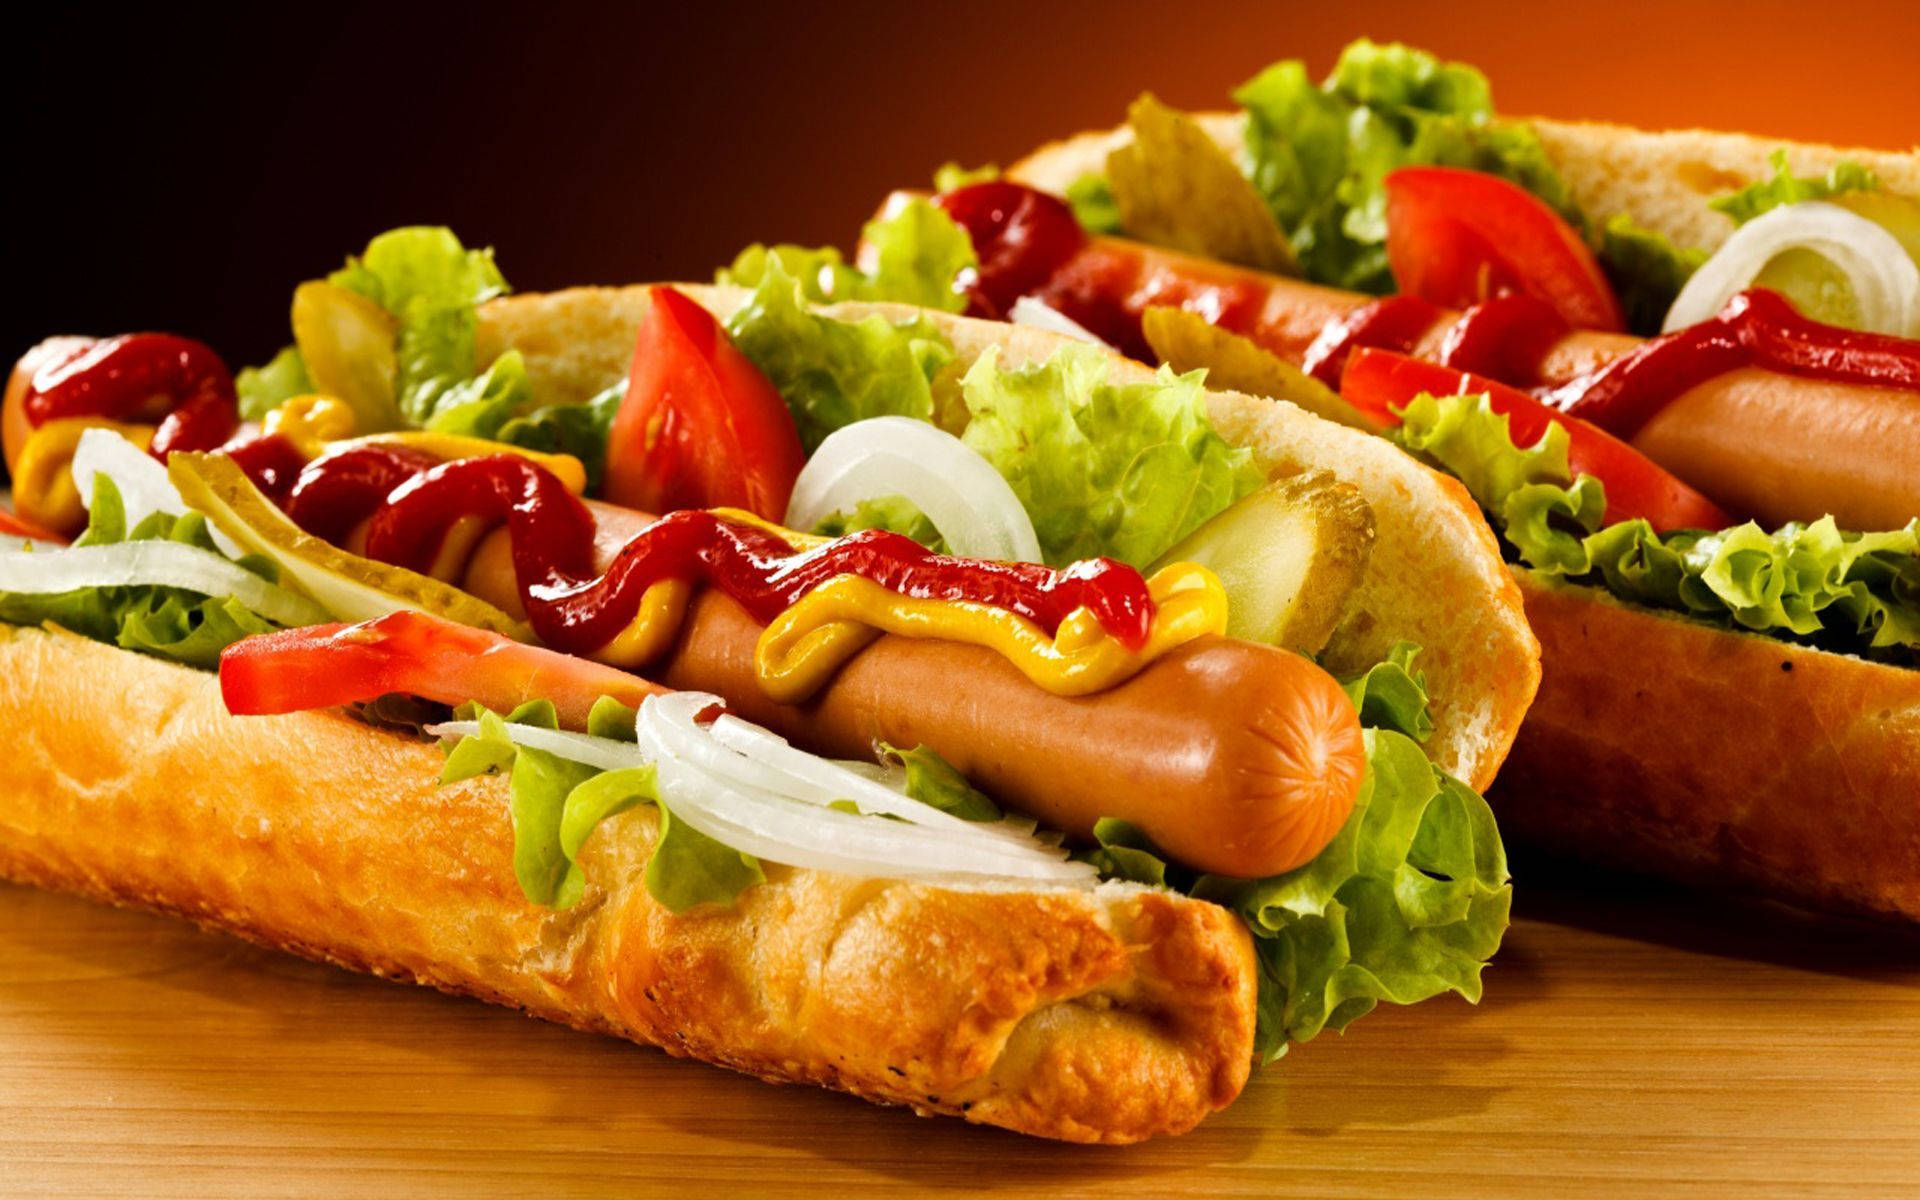 Tasty Hotdog Sandwiches For Lunch